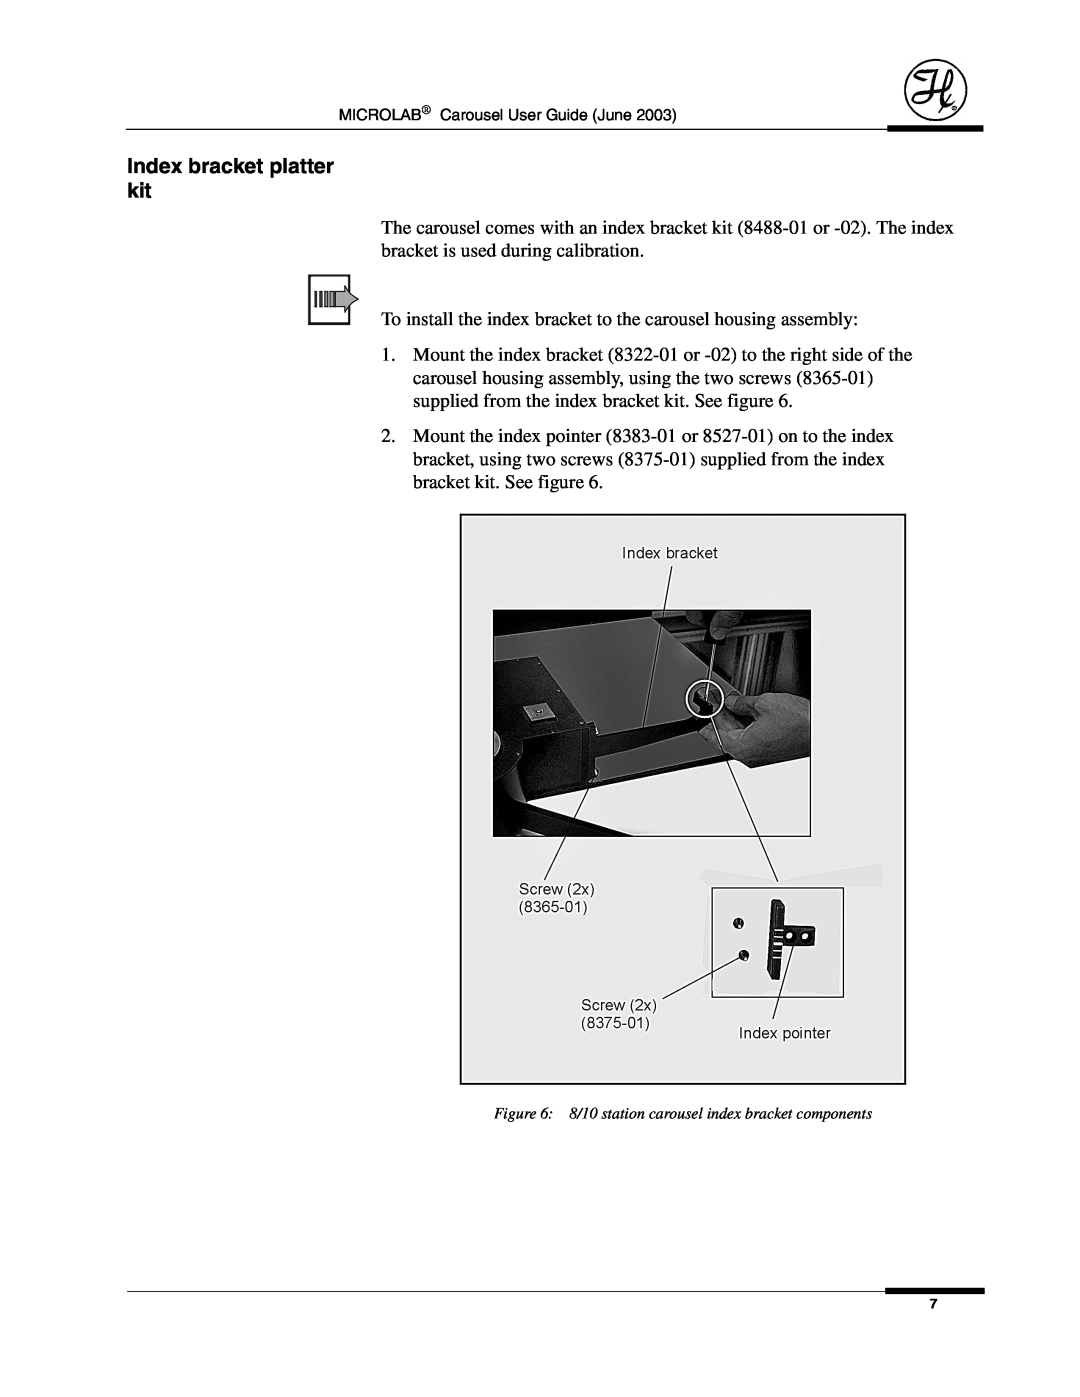 Hamilton Electronics 8534-01 manual Index bracket platter kit 